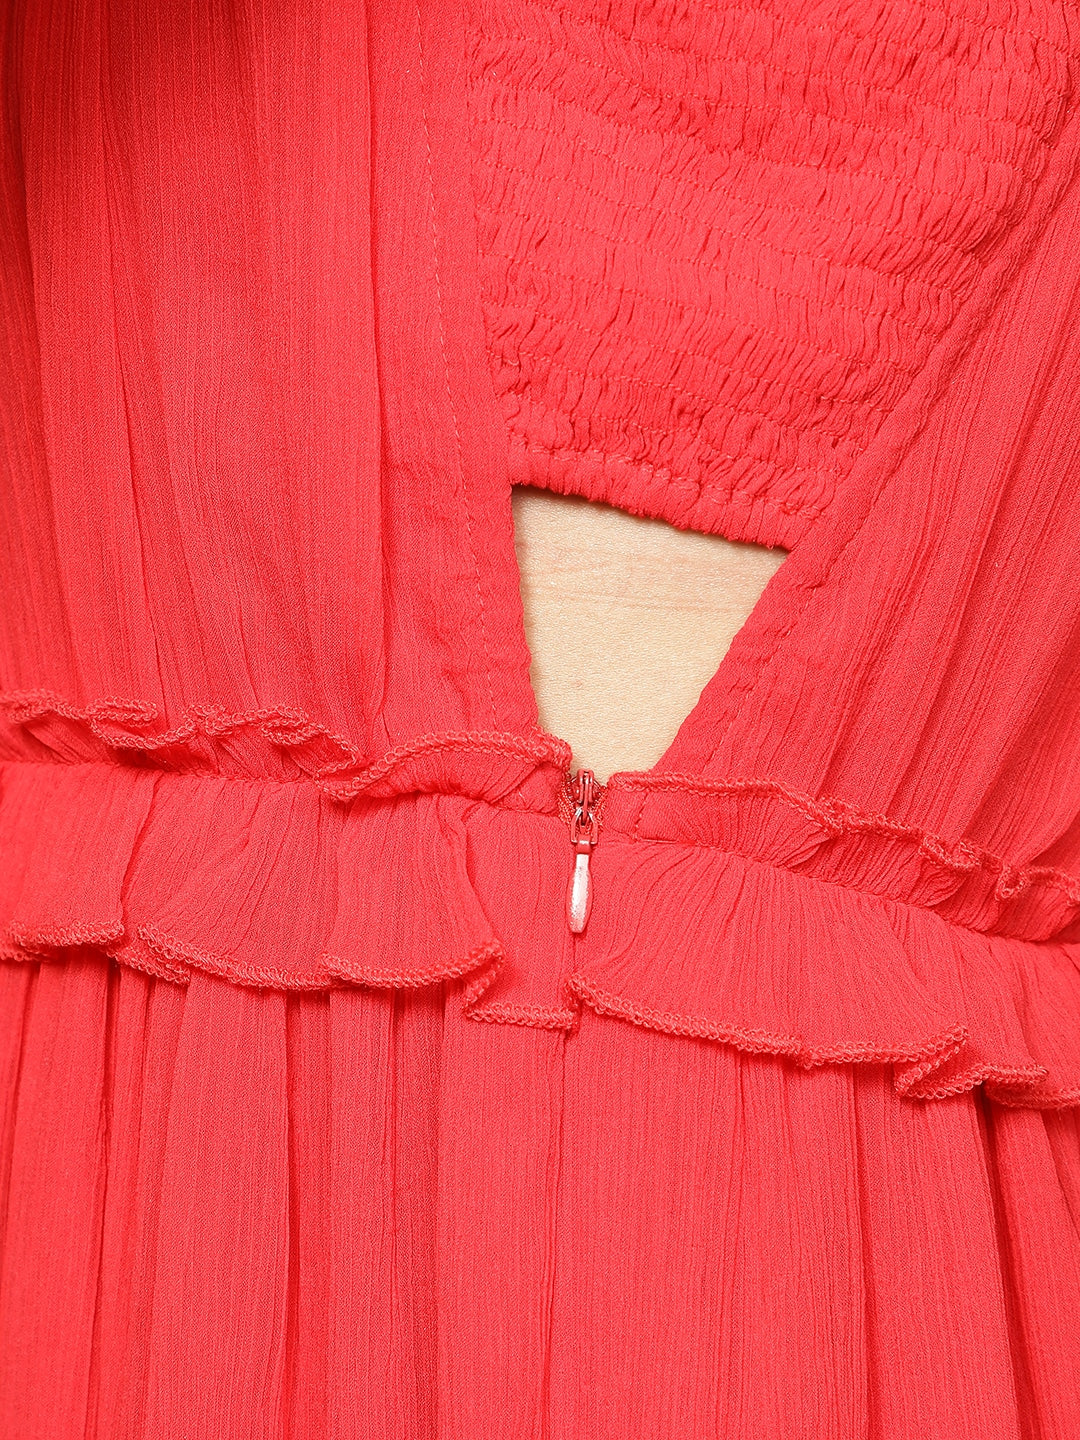 Blanc9 Rosy Red Dress